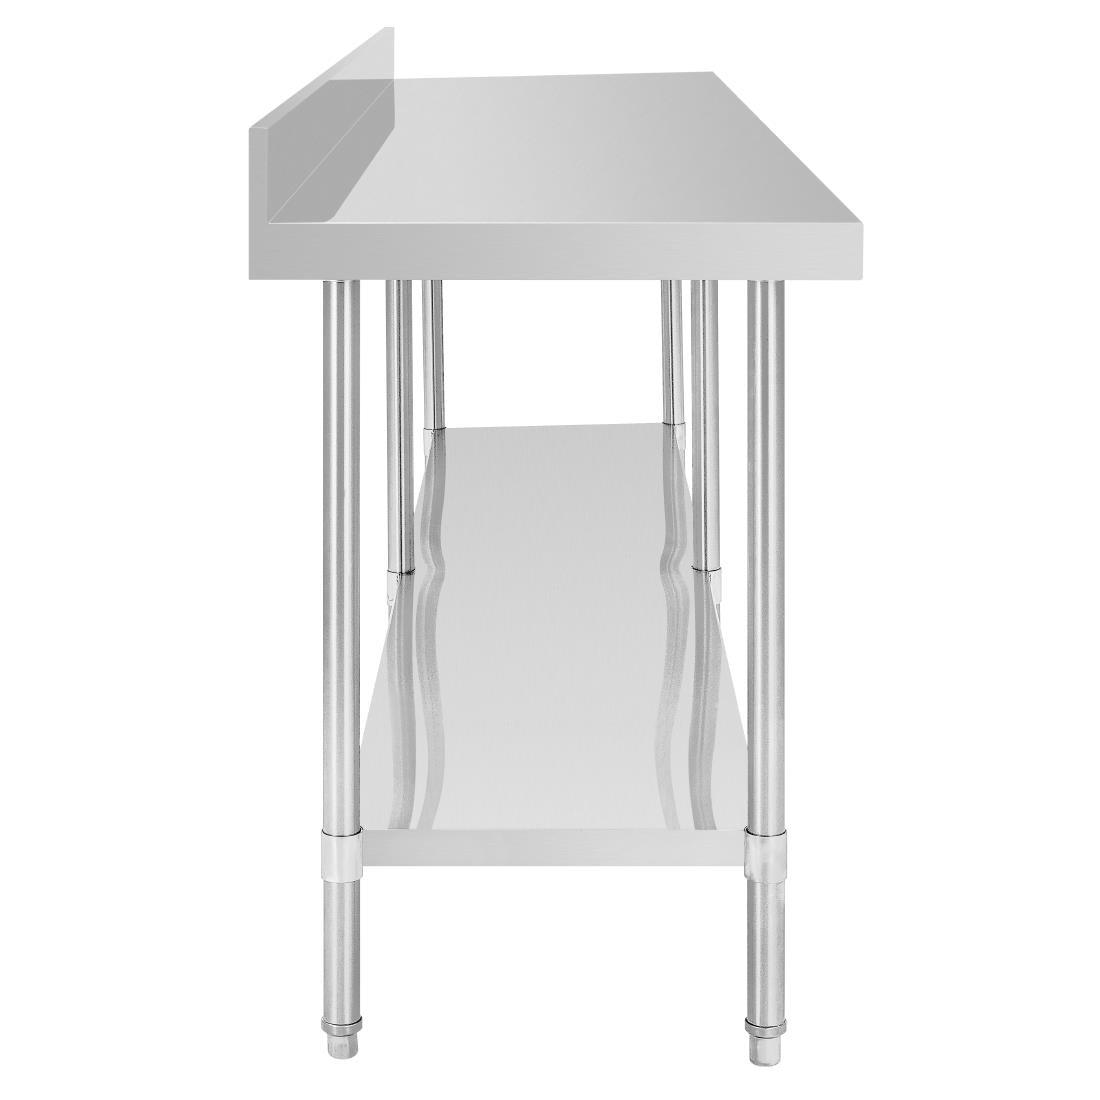 Vogue DA343 Vogue Premium 304 Stainless Steel Table with Upstand - 2400x600x900mm - HospoStore